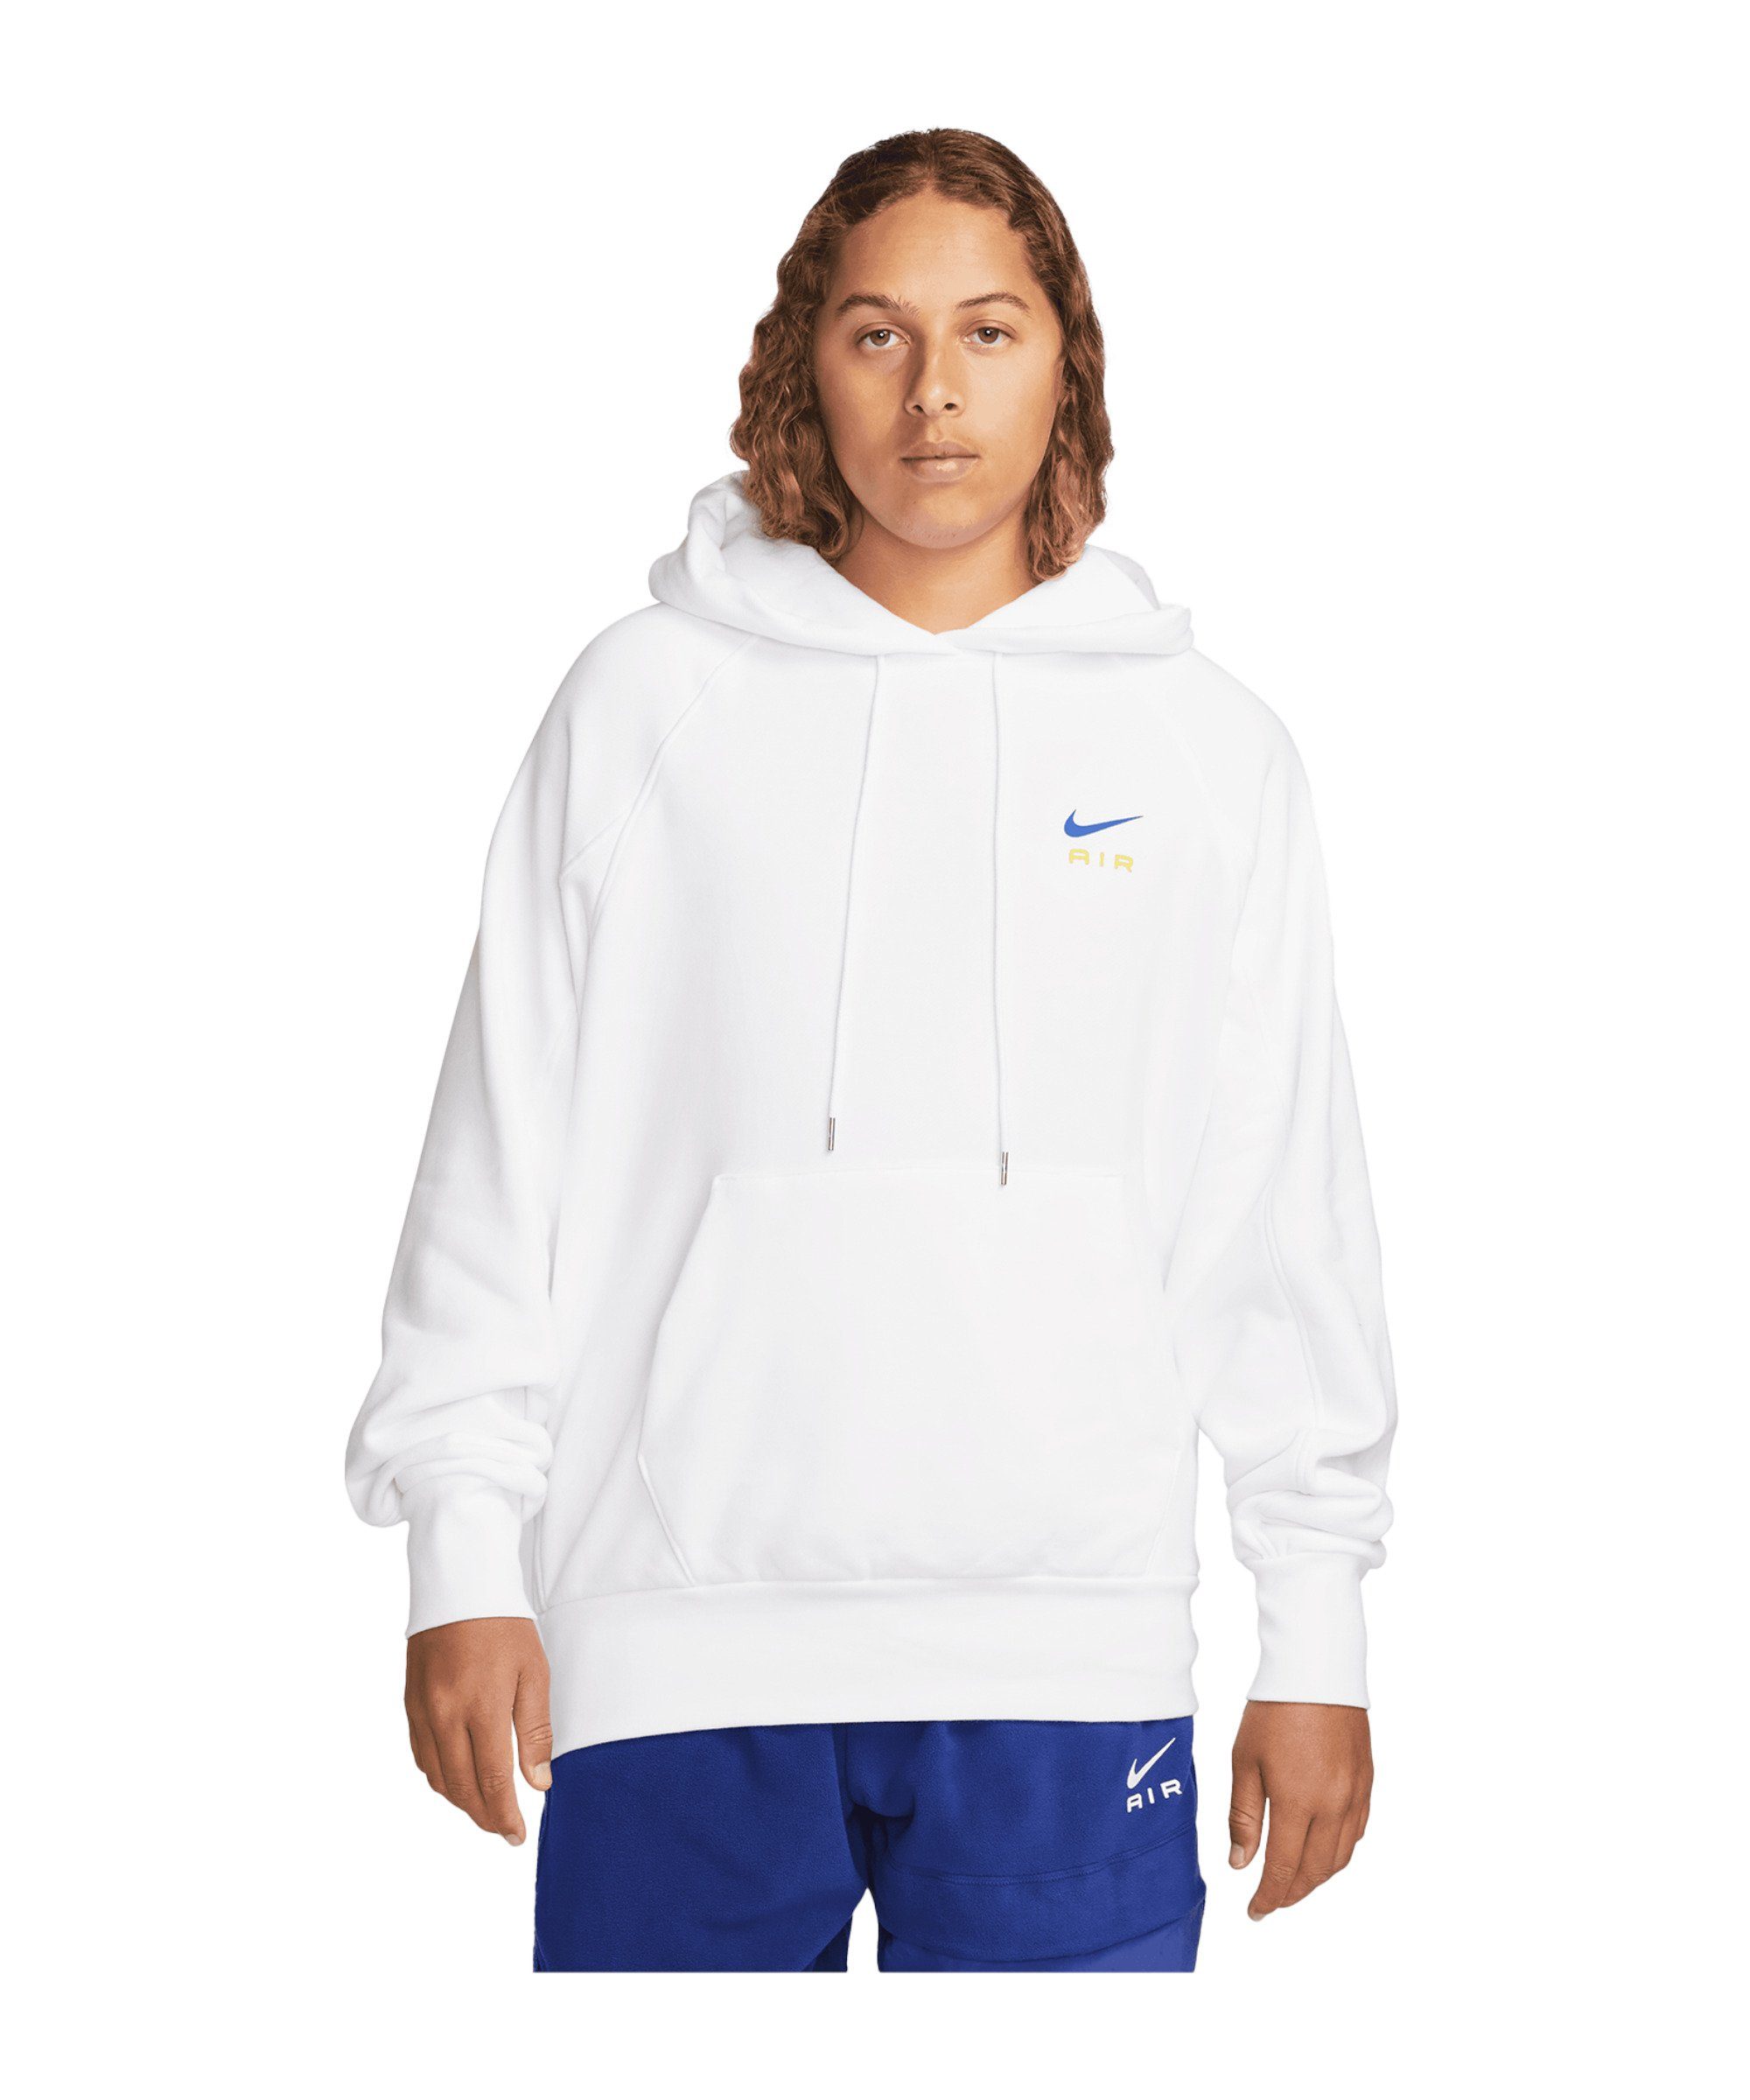 Hoody FT Sweatshirt Air Nike weissgelb Sportswear